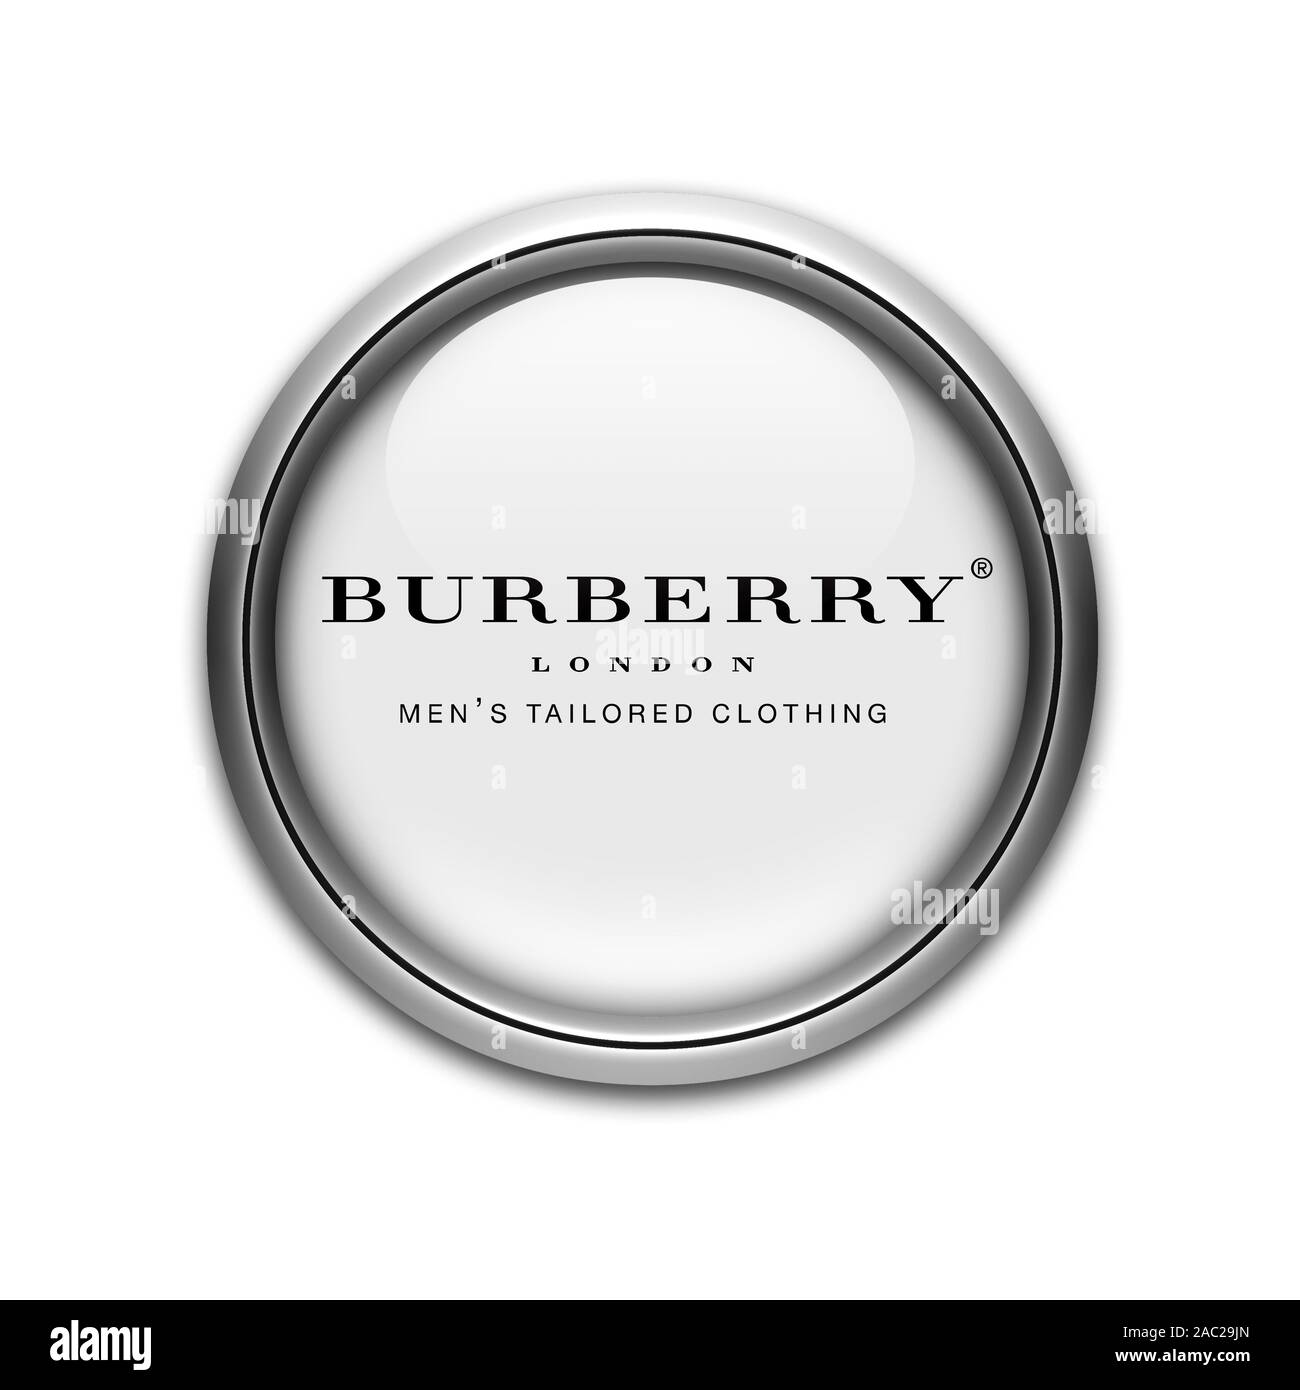 Burberry logo Stock Photo - Alamy